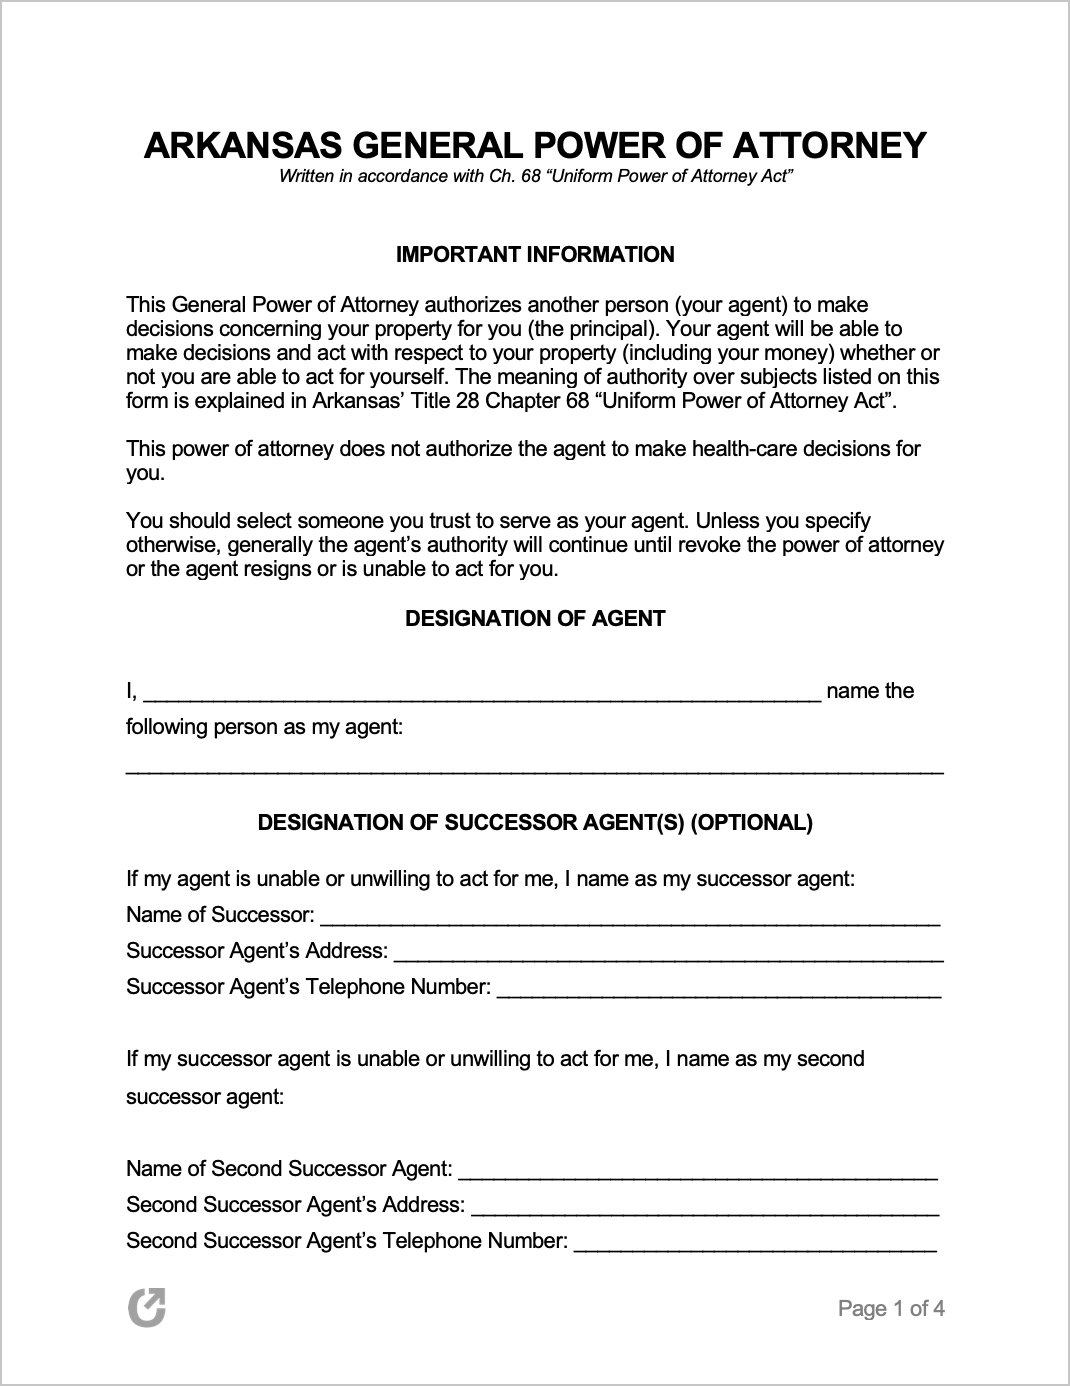 Free Arkansas General Power of Attorney Form PDF WORD